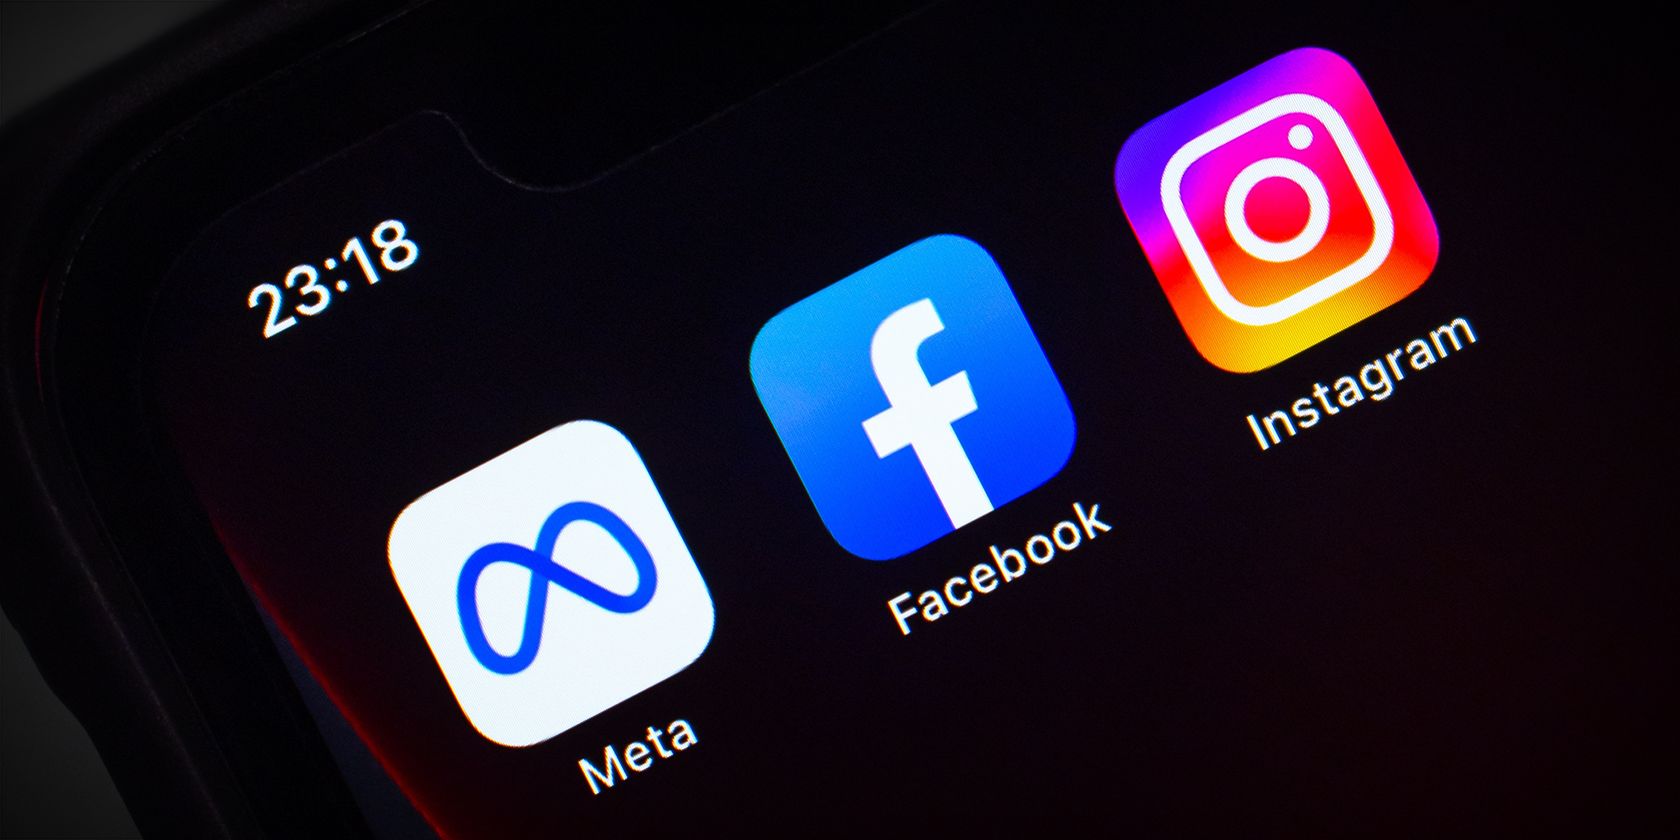 meta facebook and instagram app logos on a smartphone